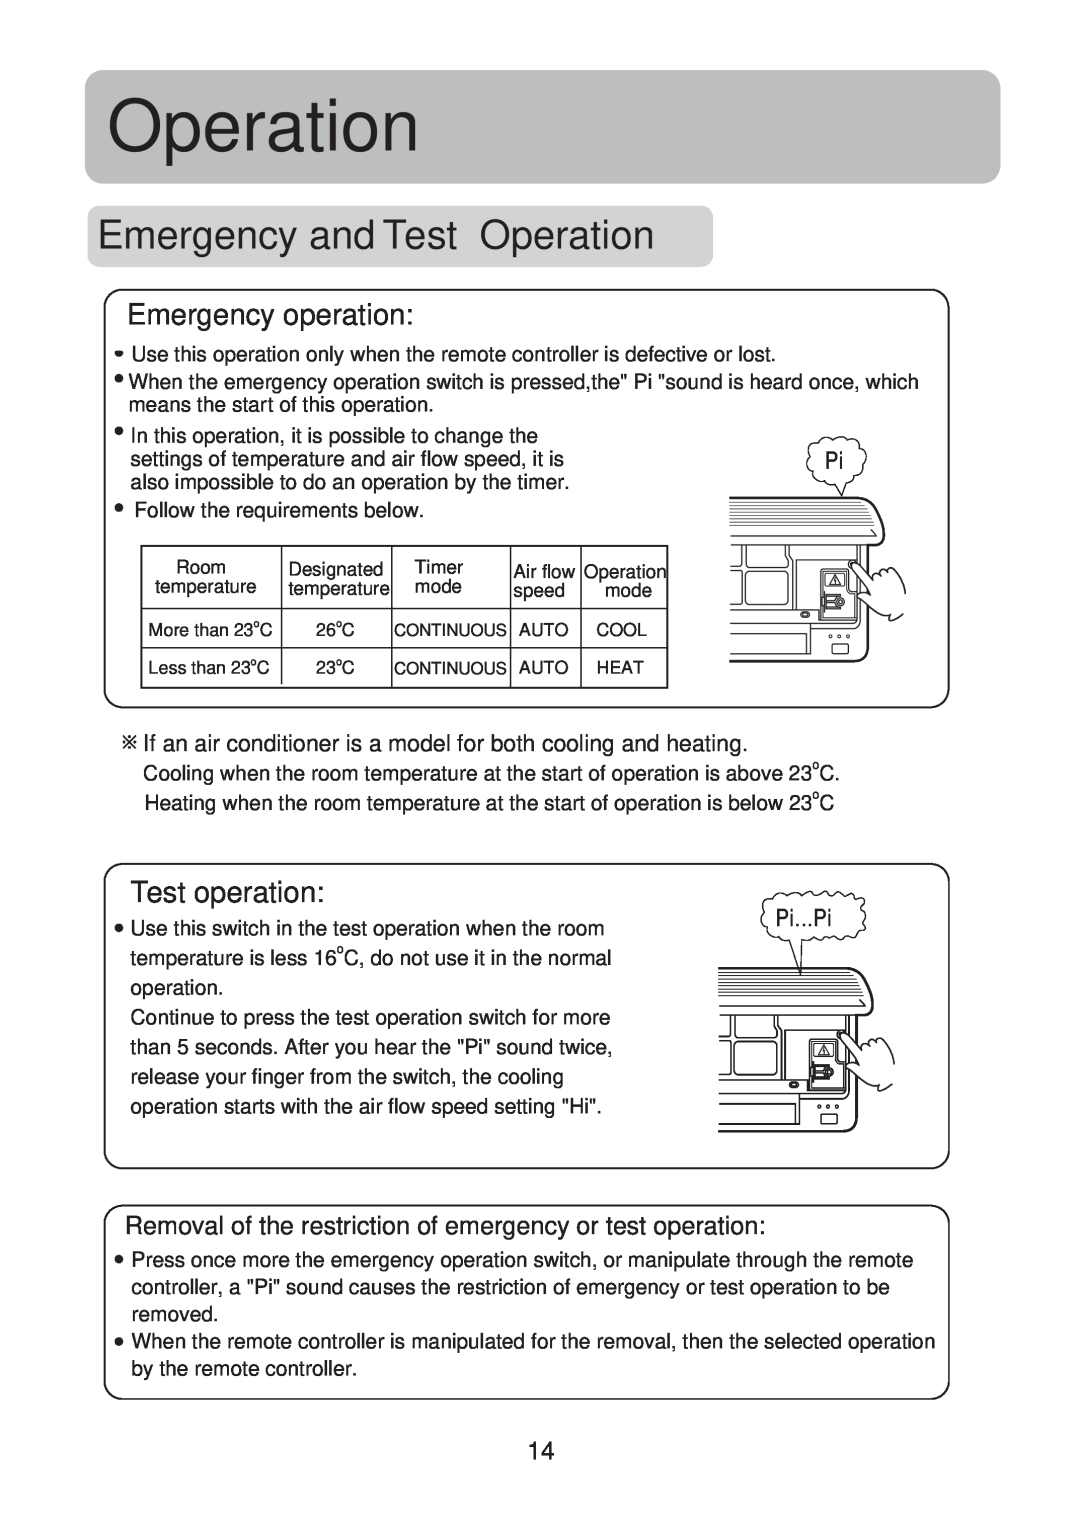 Haier HSU-18CK13(T3) operation manual Emergency and Test Operation, Emergency operation, Test operation, Pi...Pi 